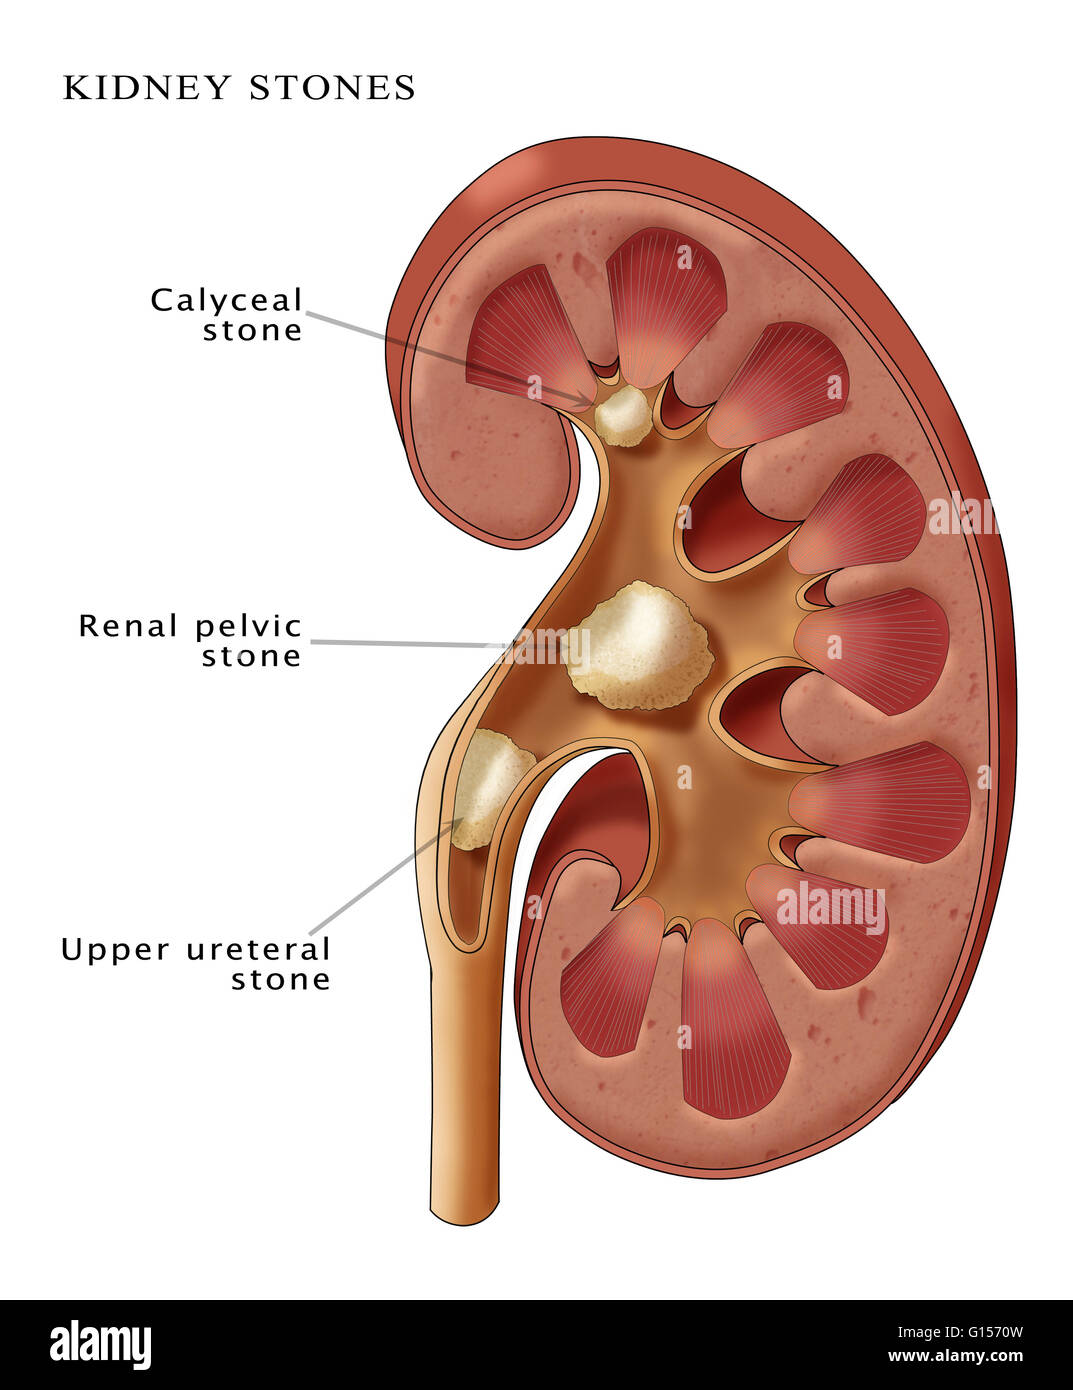 Free trial the kidney stone removal report kidneystoneremedy com.